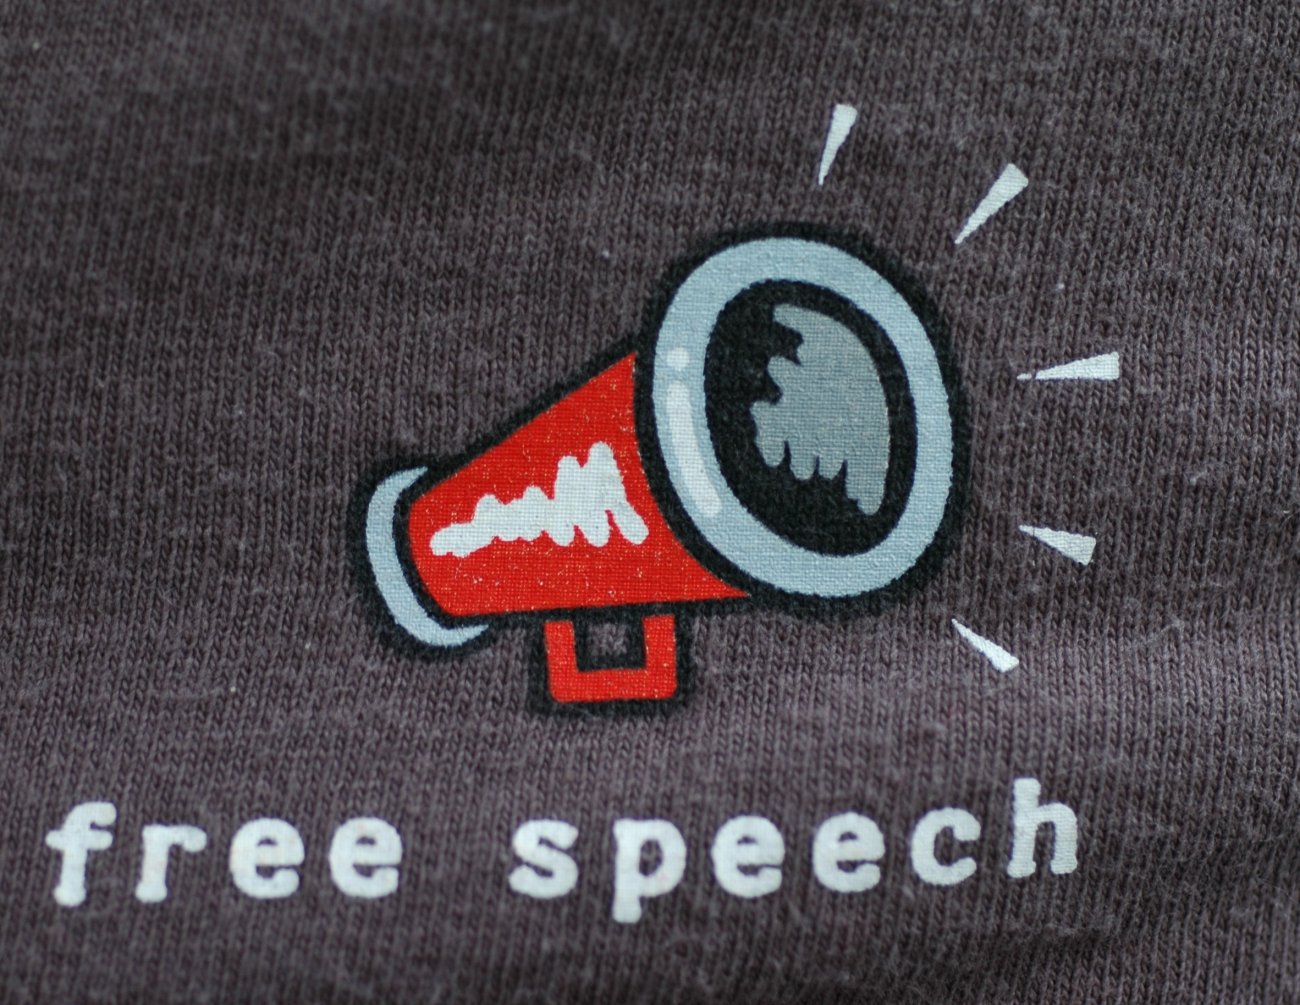 Free speech